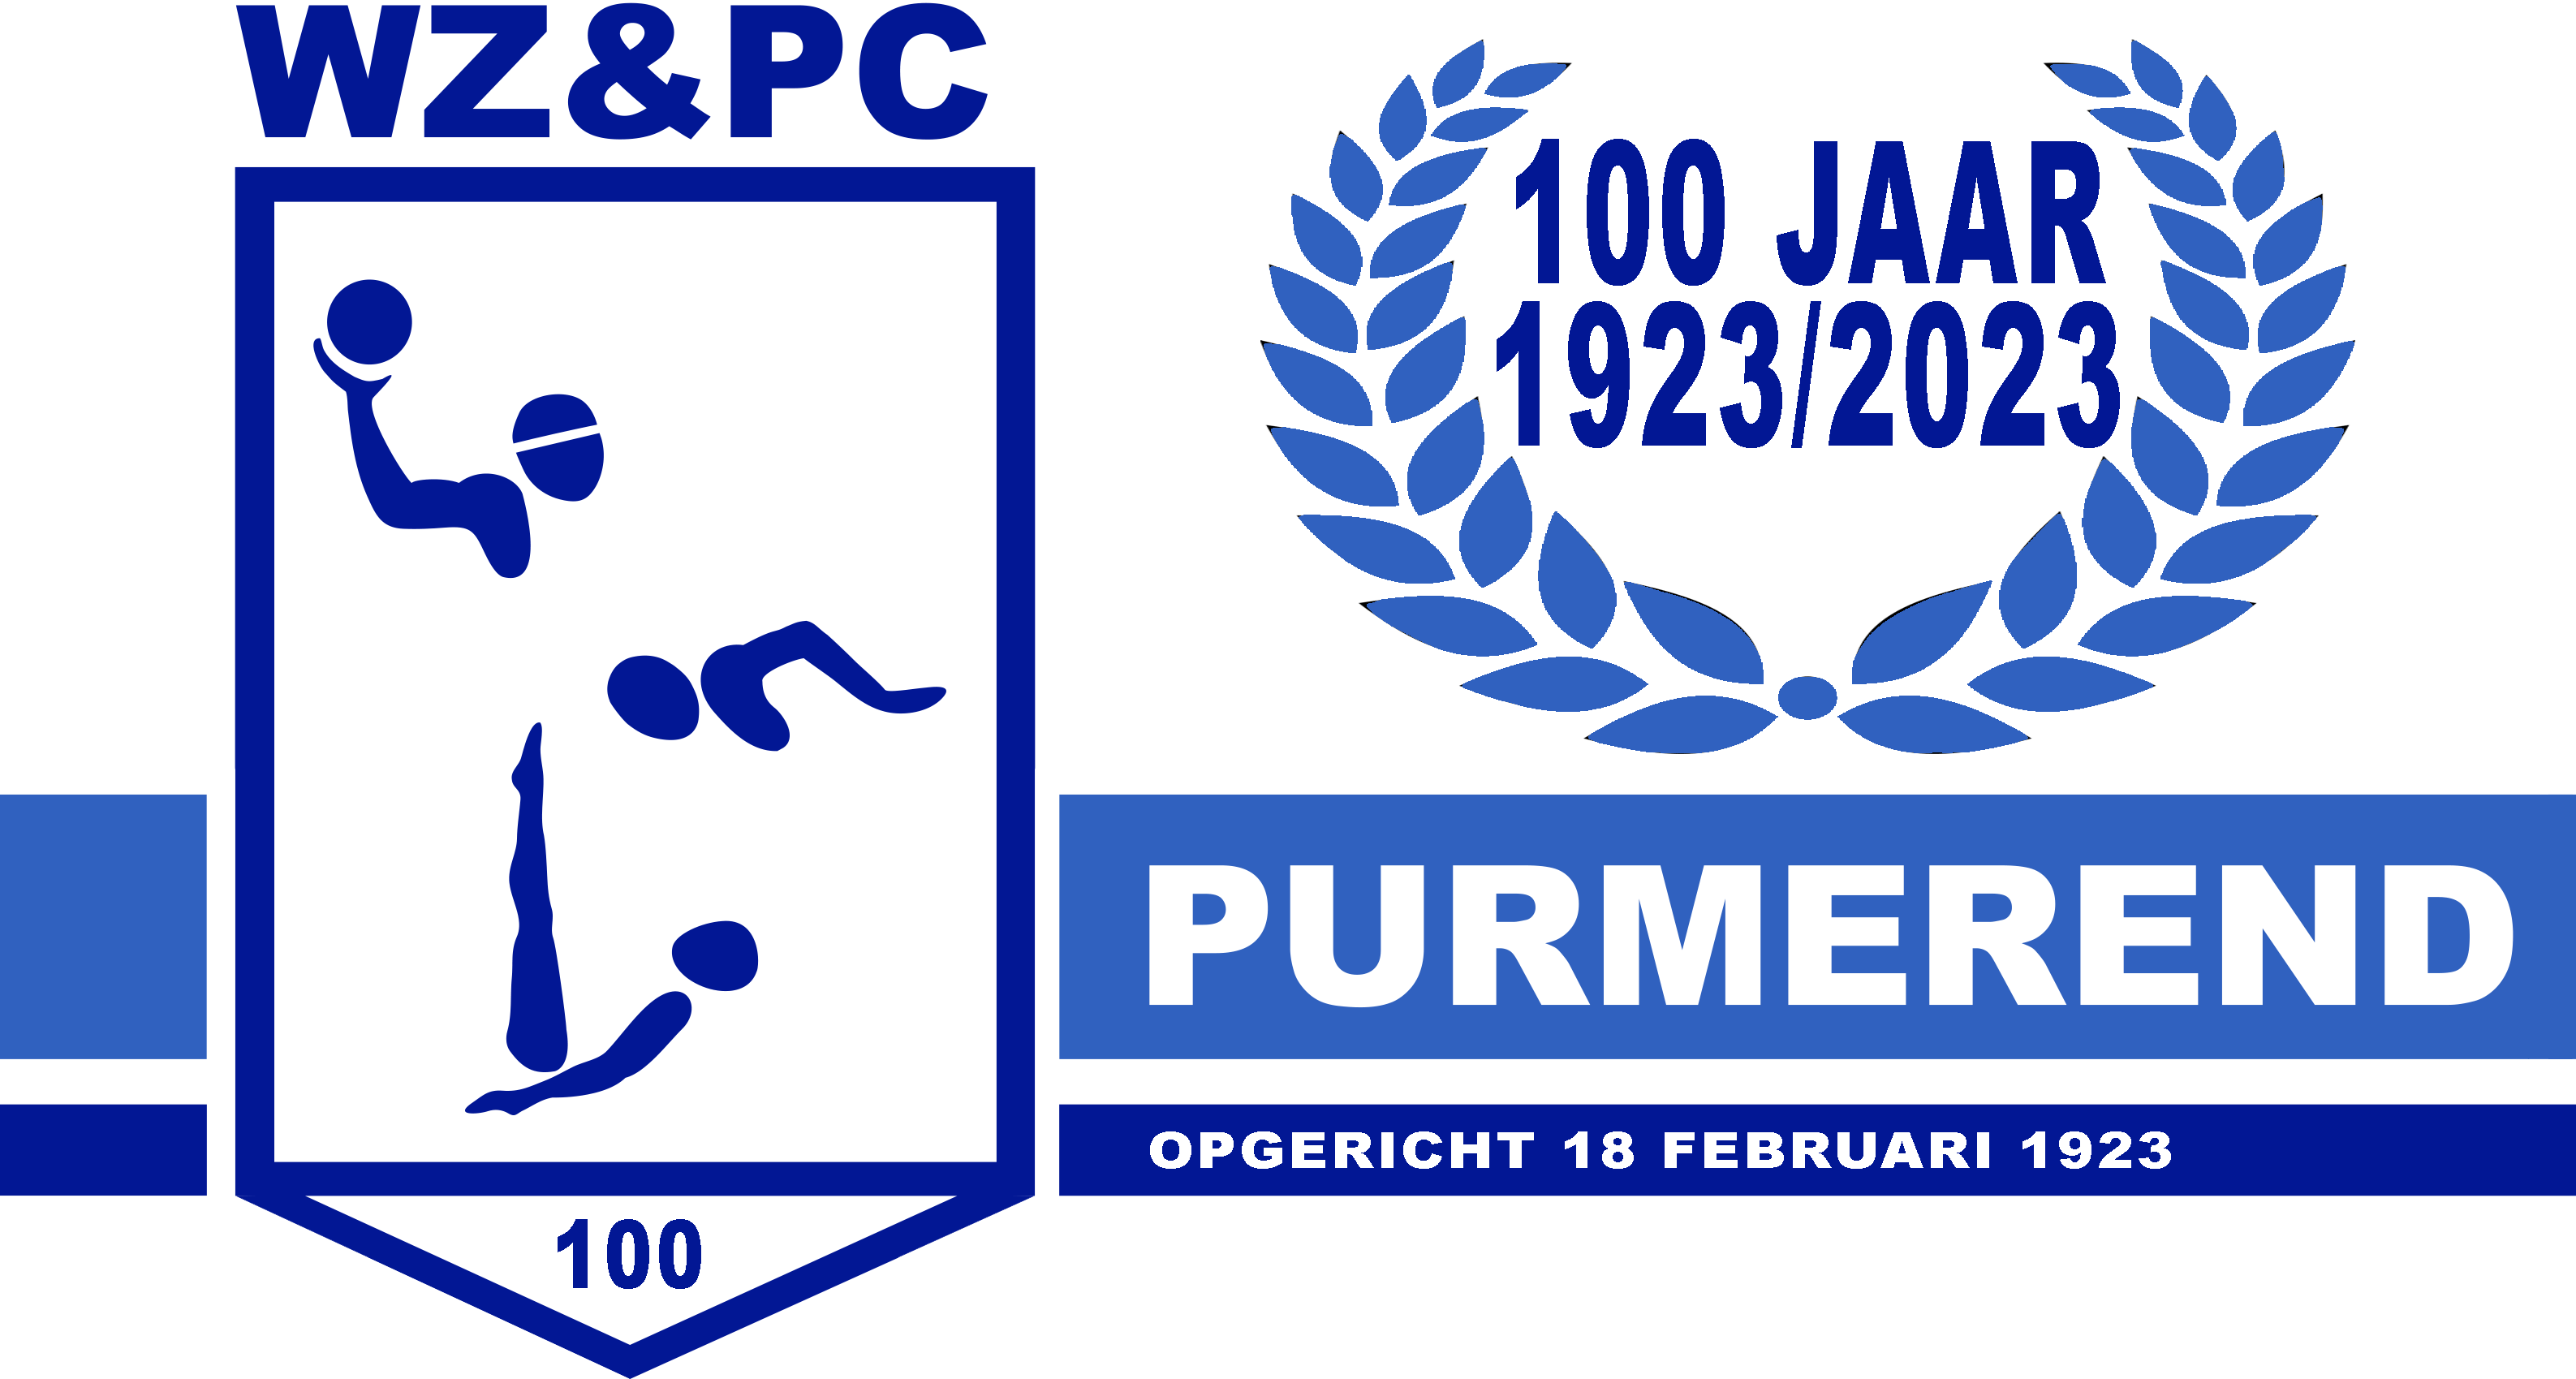 https://wzpc.nl/wp-content/uploads/2023/01/Logo_WZPC-100JR.png